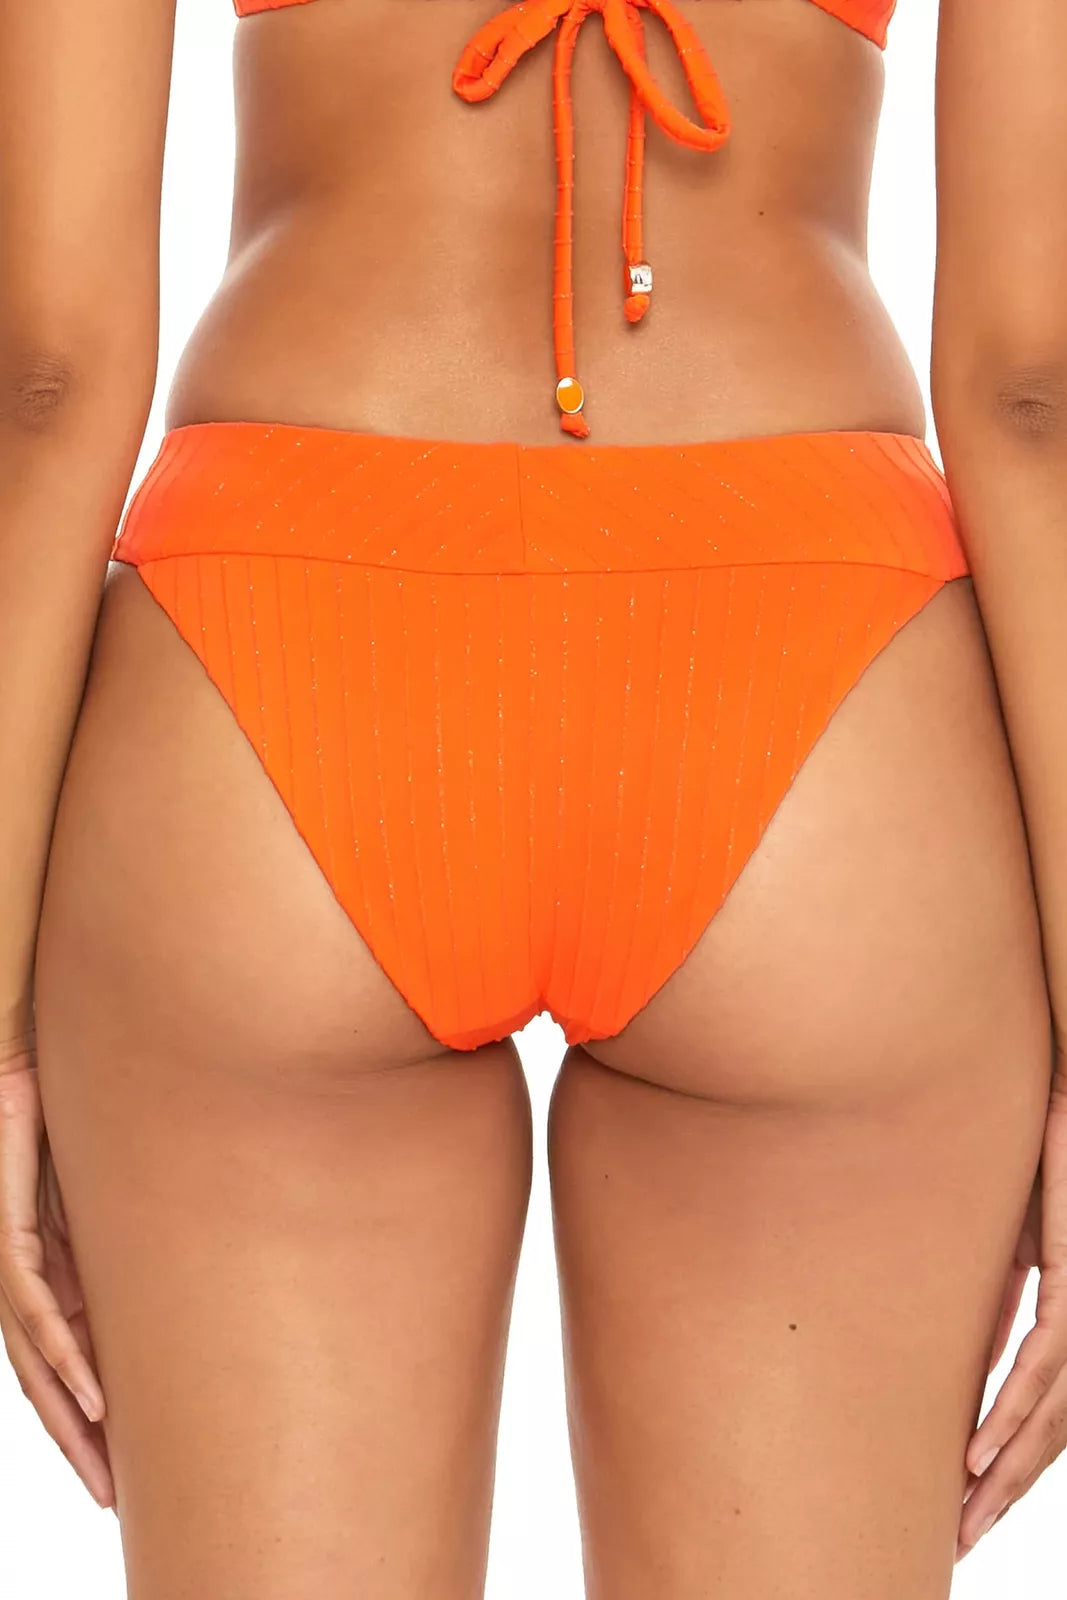 ISABELLA ROSE Angelica Maui Hipster Bikini Bottom